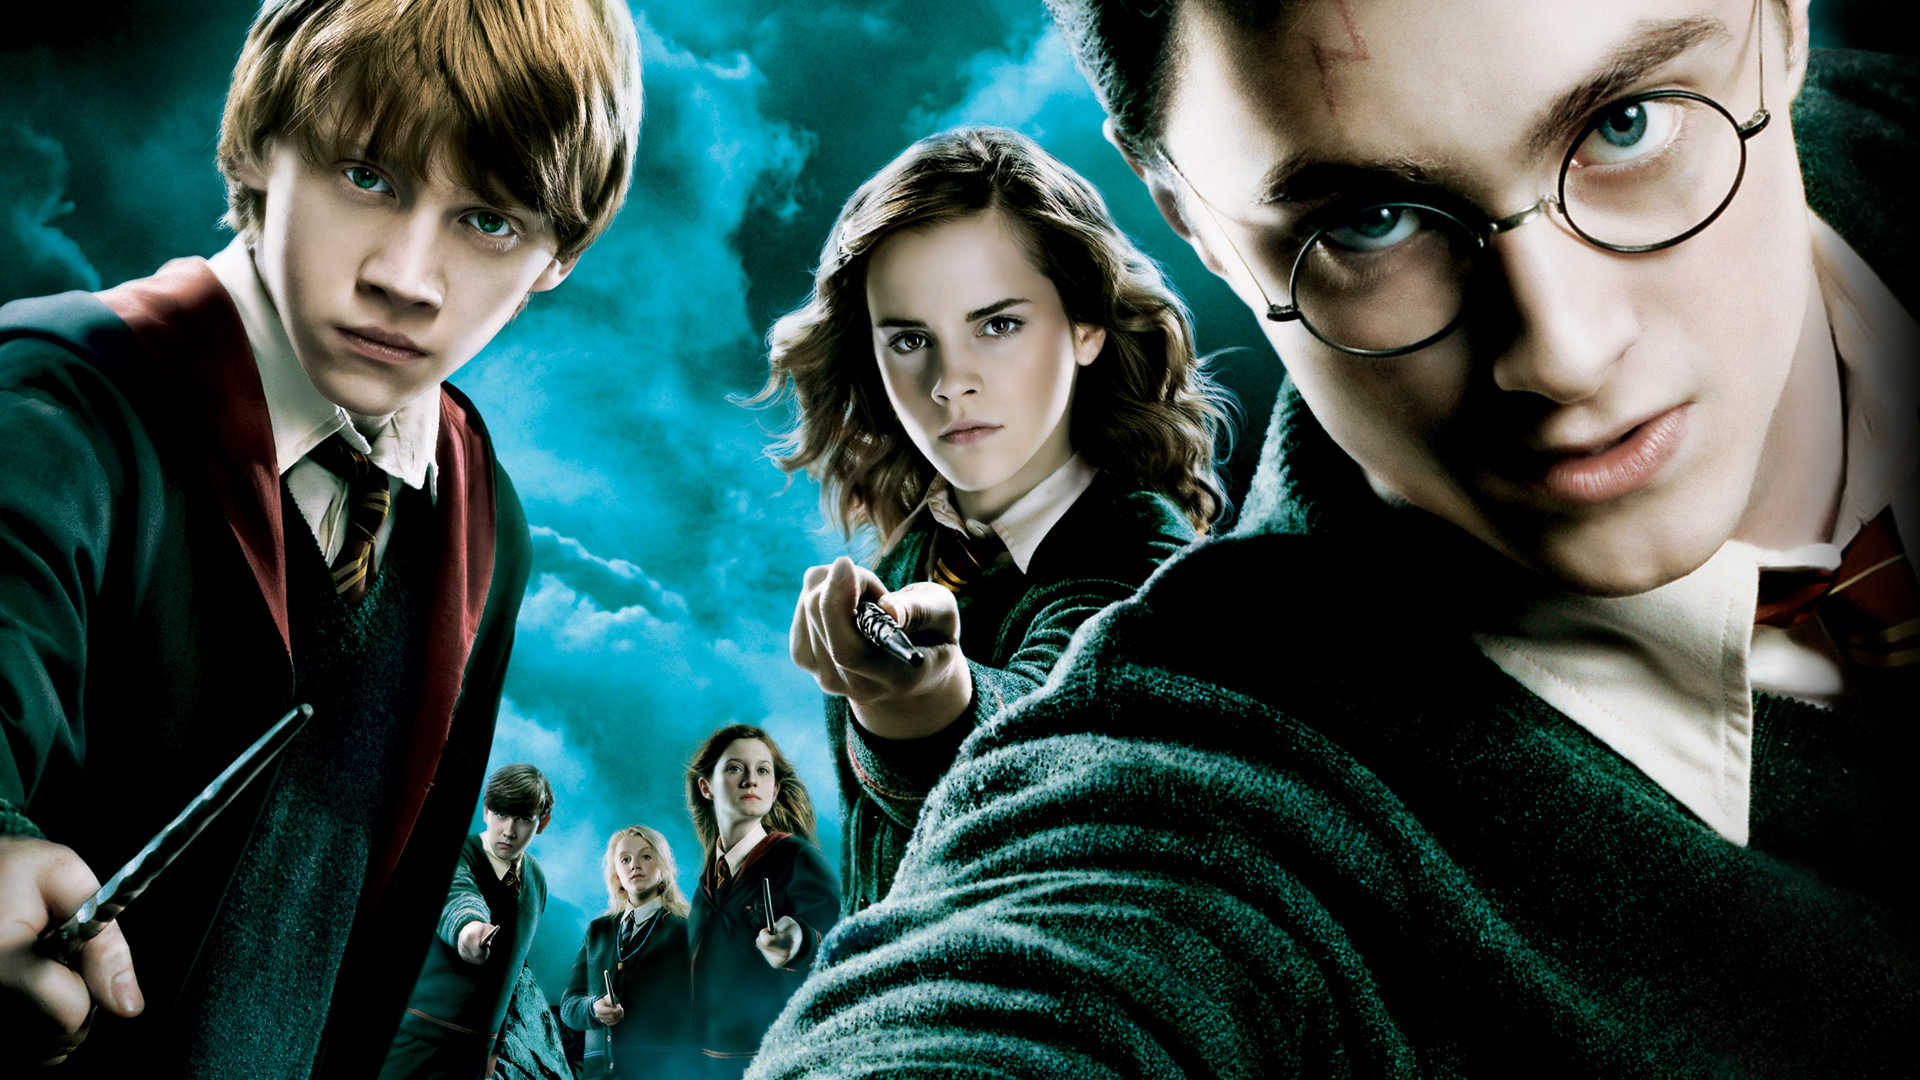 Harry potter wizards unite trailer